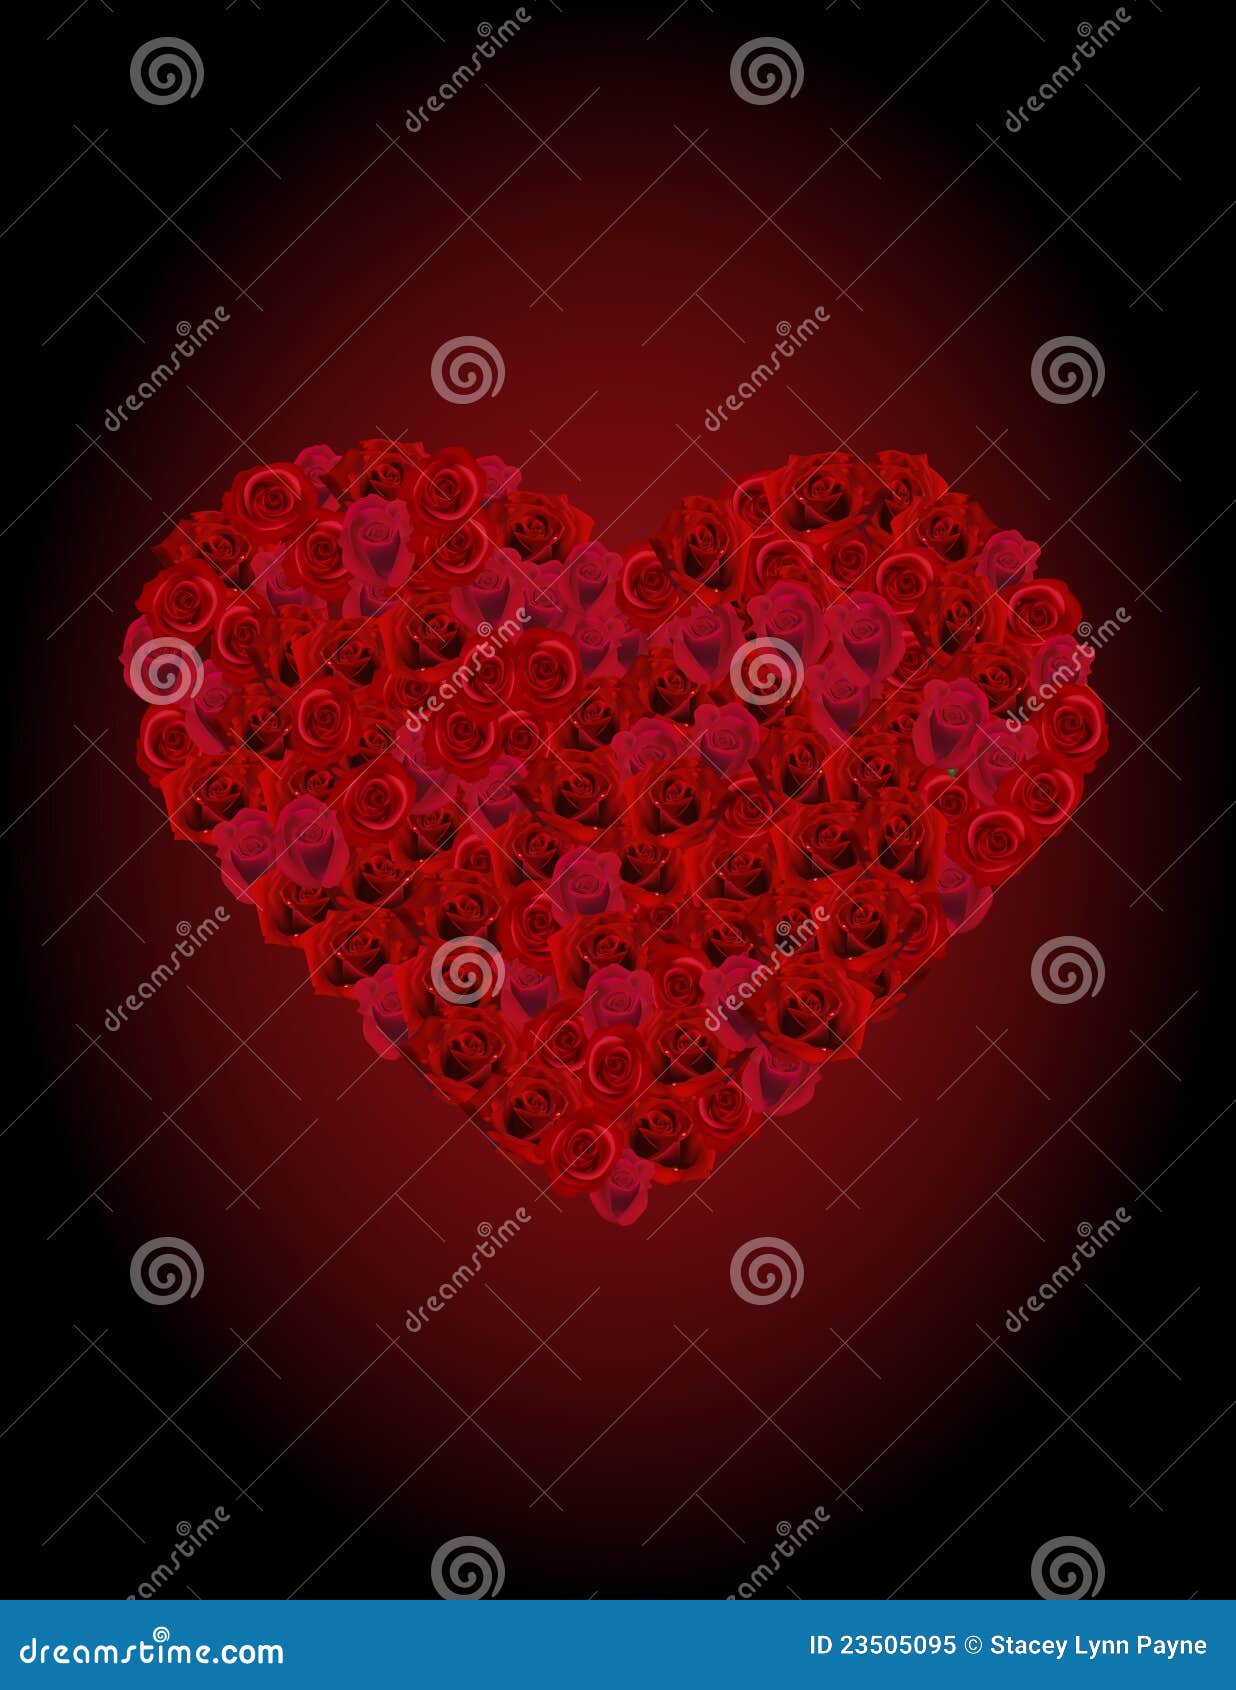 Heart From Roses stock illustration. Illustration of shaped - 23505095